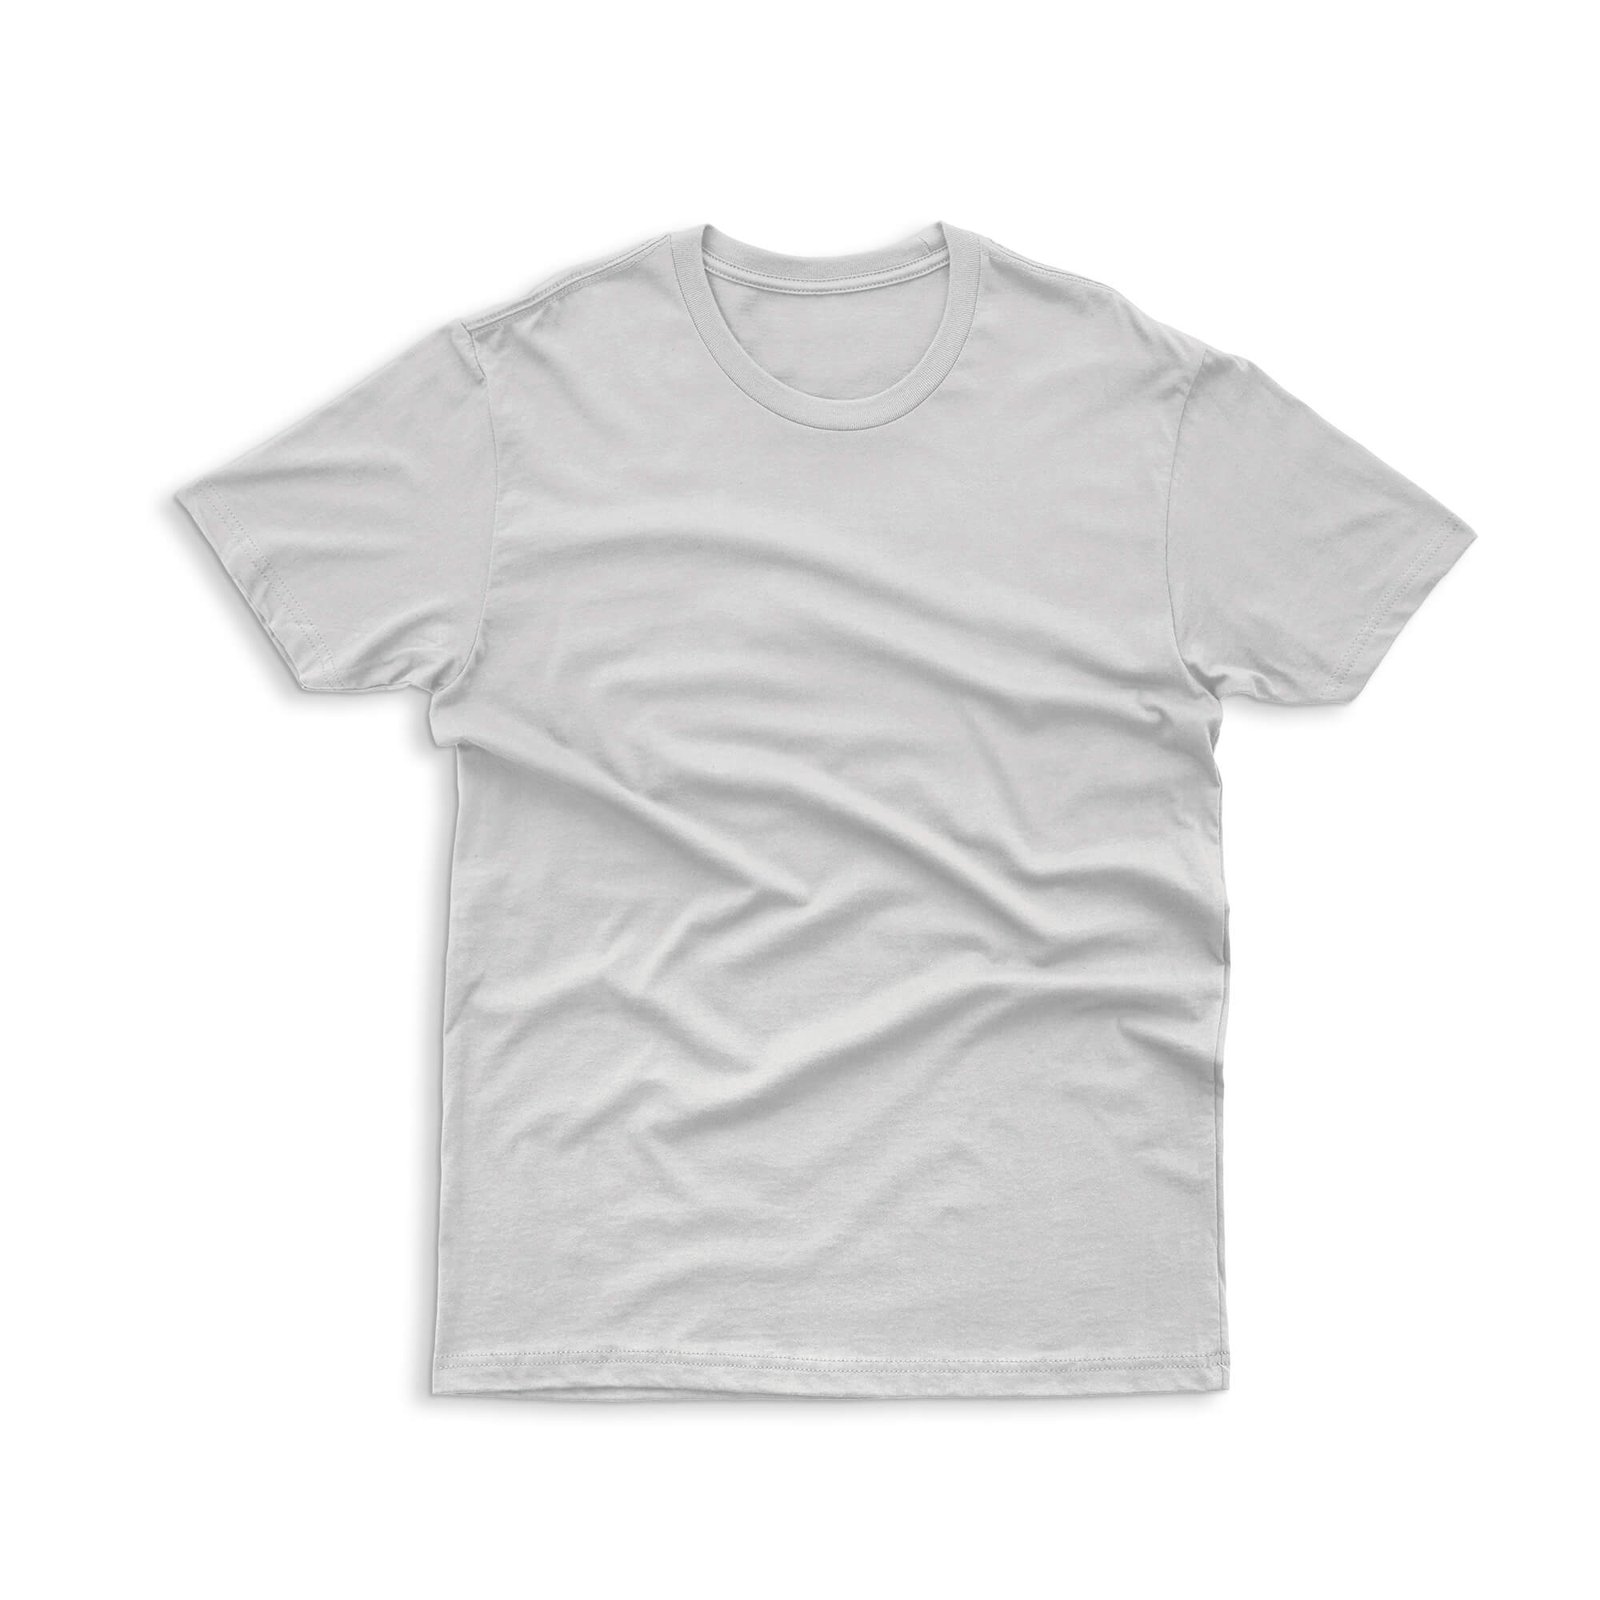 Blank Free Yoga T Shirt Mockup PSD Template